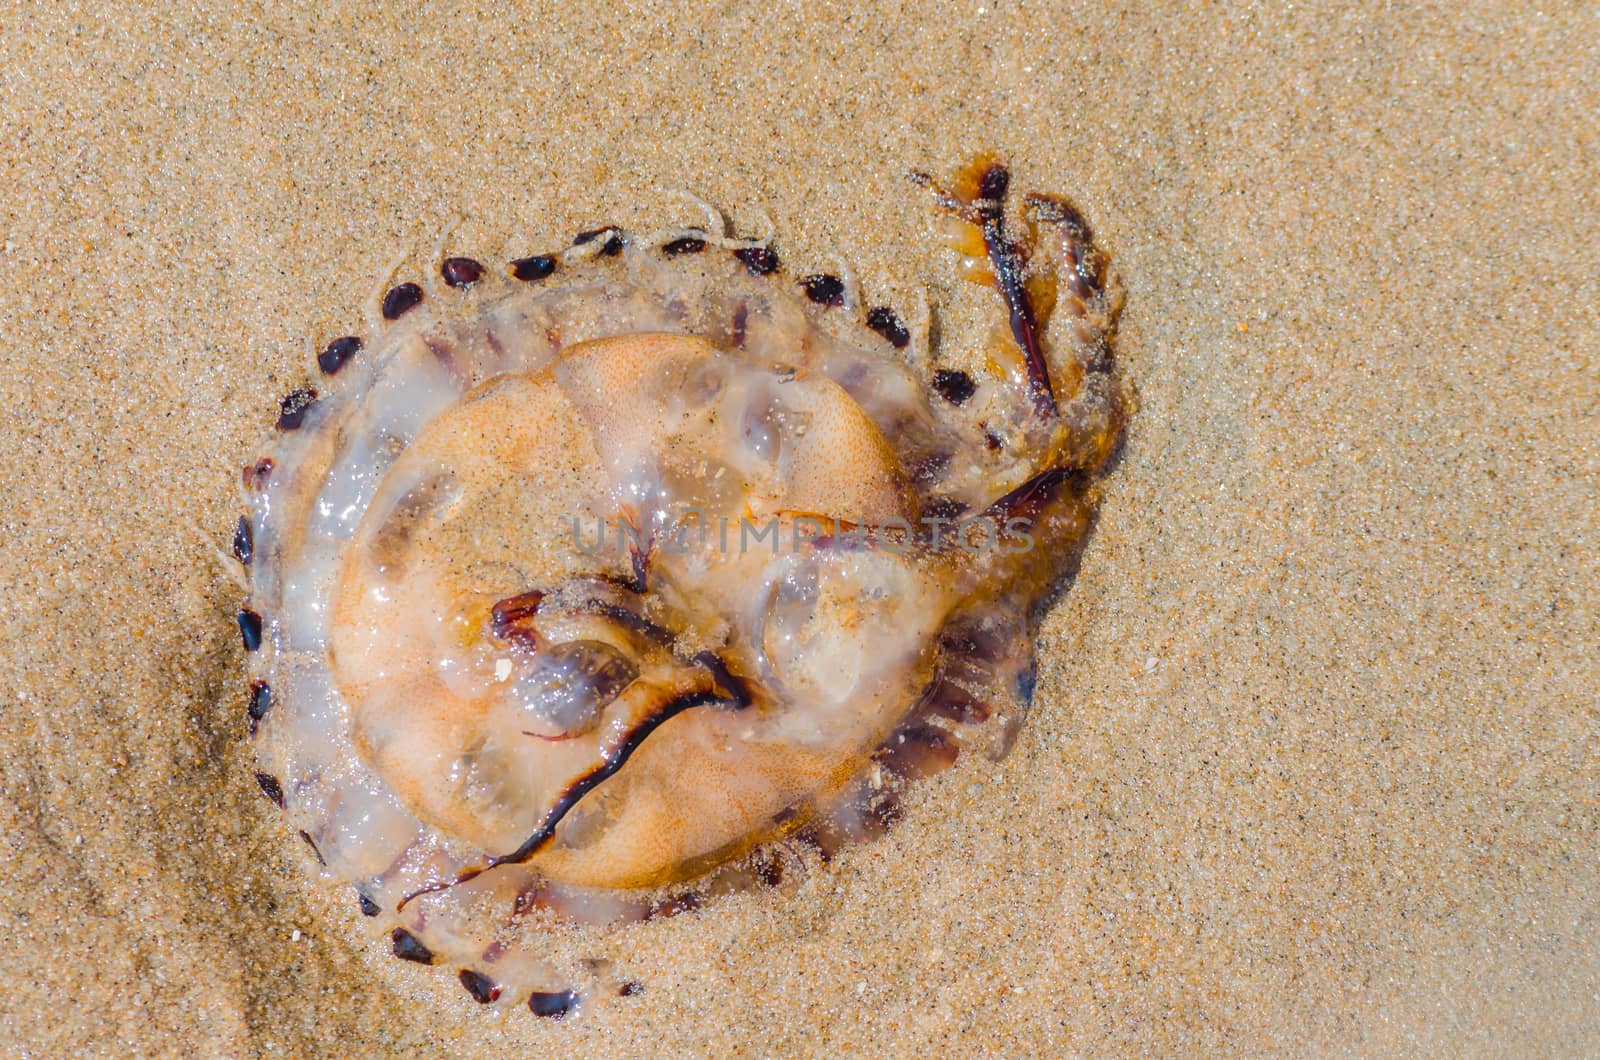 Jellyfish on a sandy beach by JFsPic